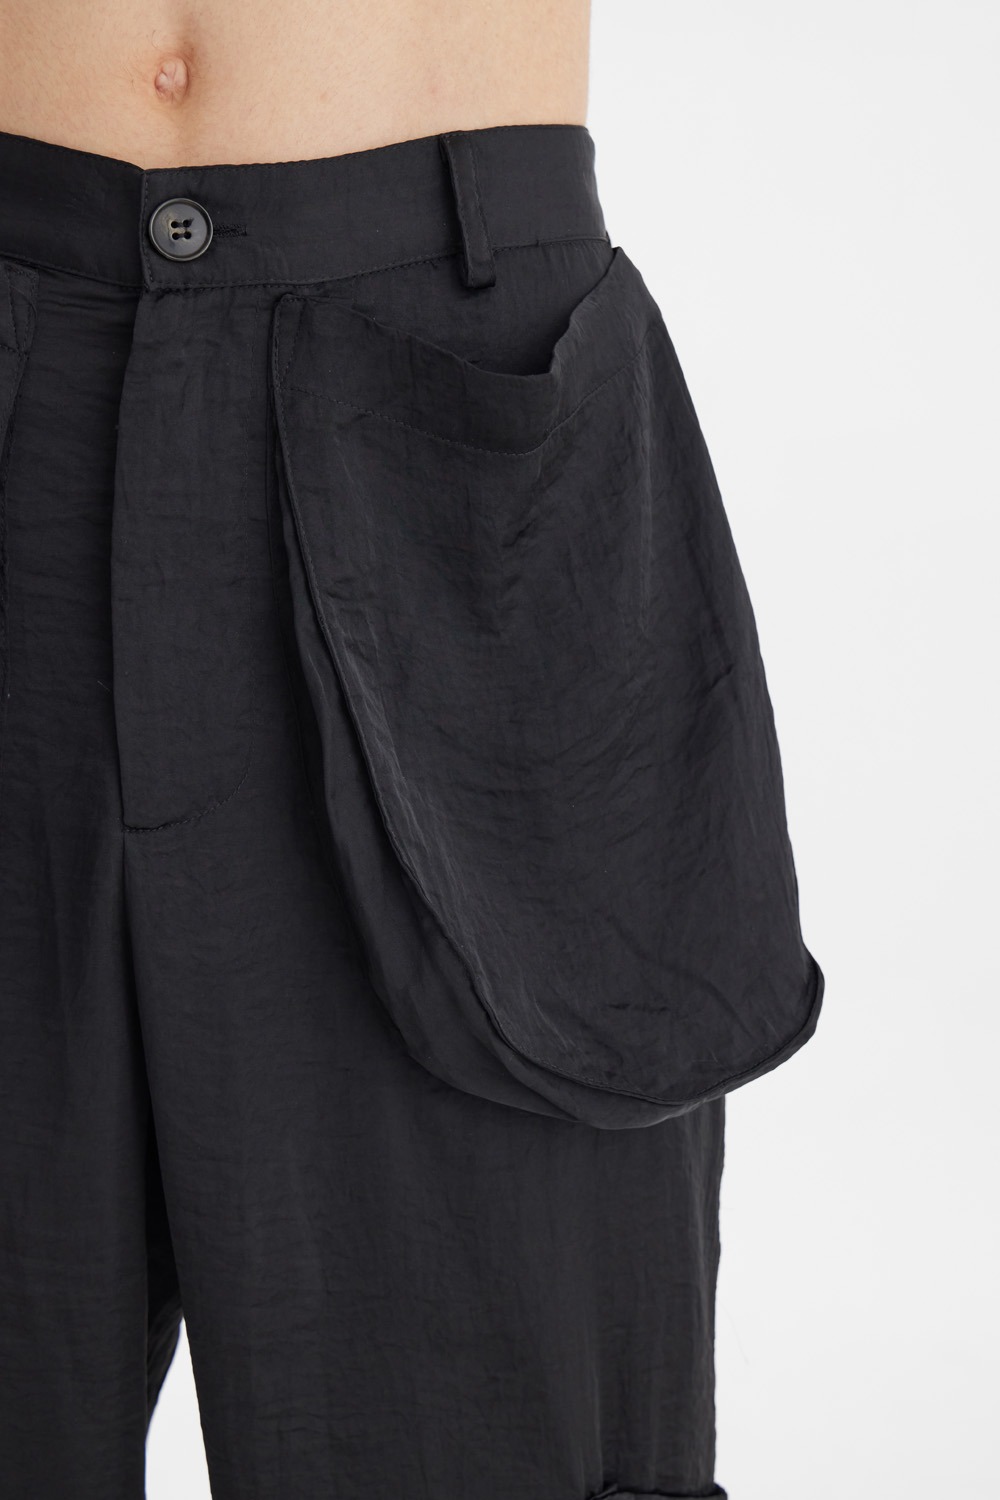 Pocket Collage Trouser-Black